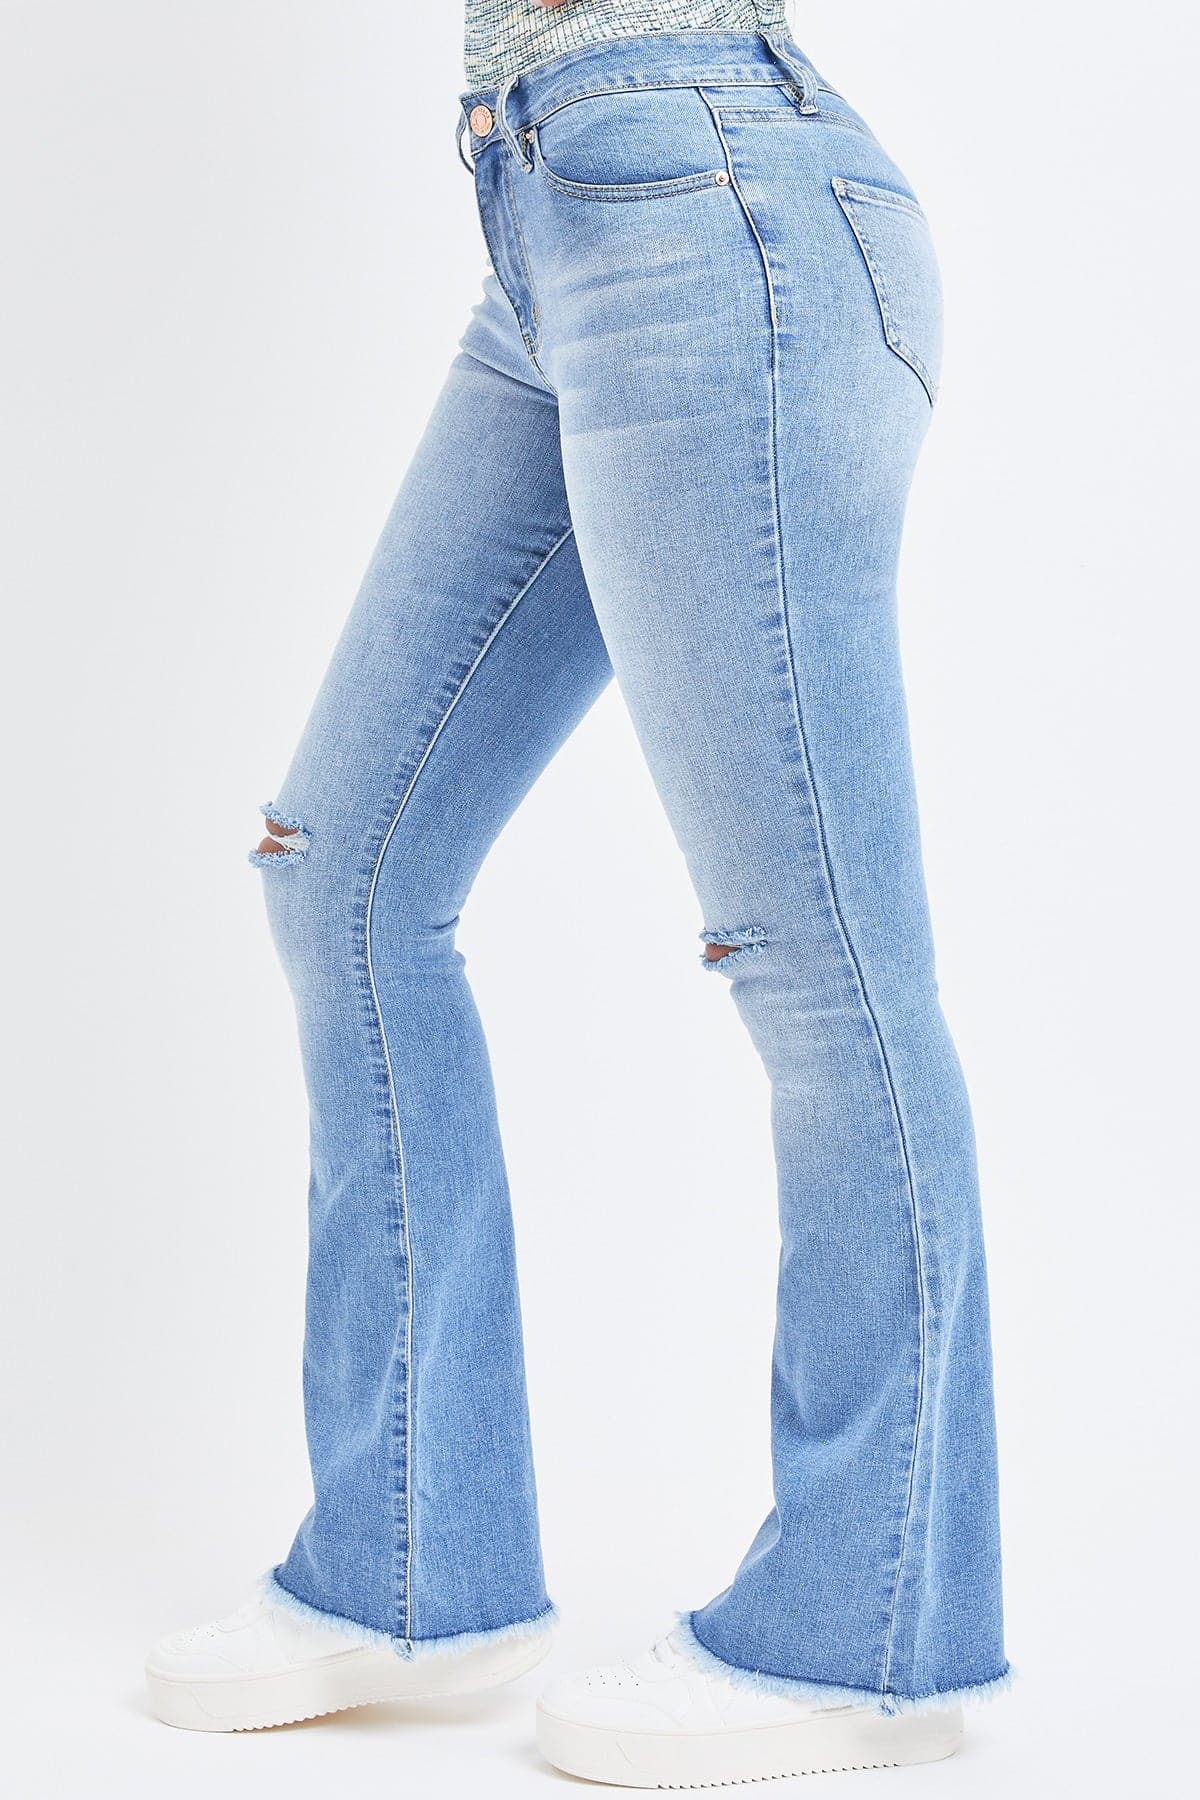 Women's Essential  Super Flare Jeans - Long Inseam